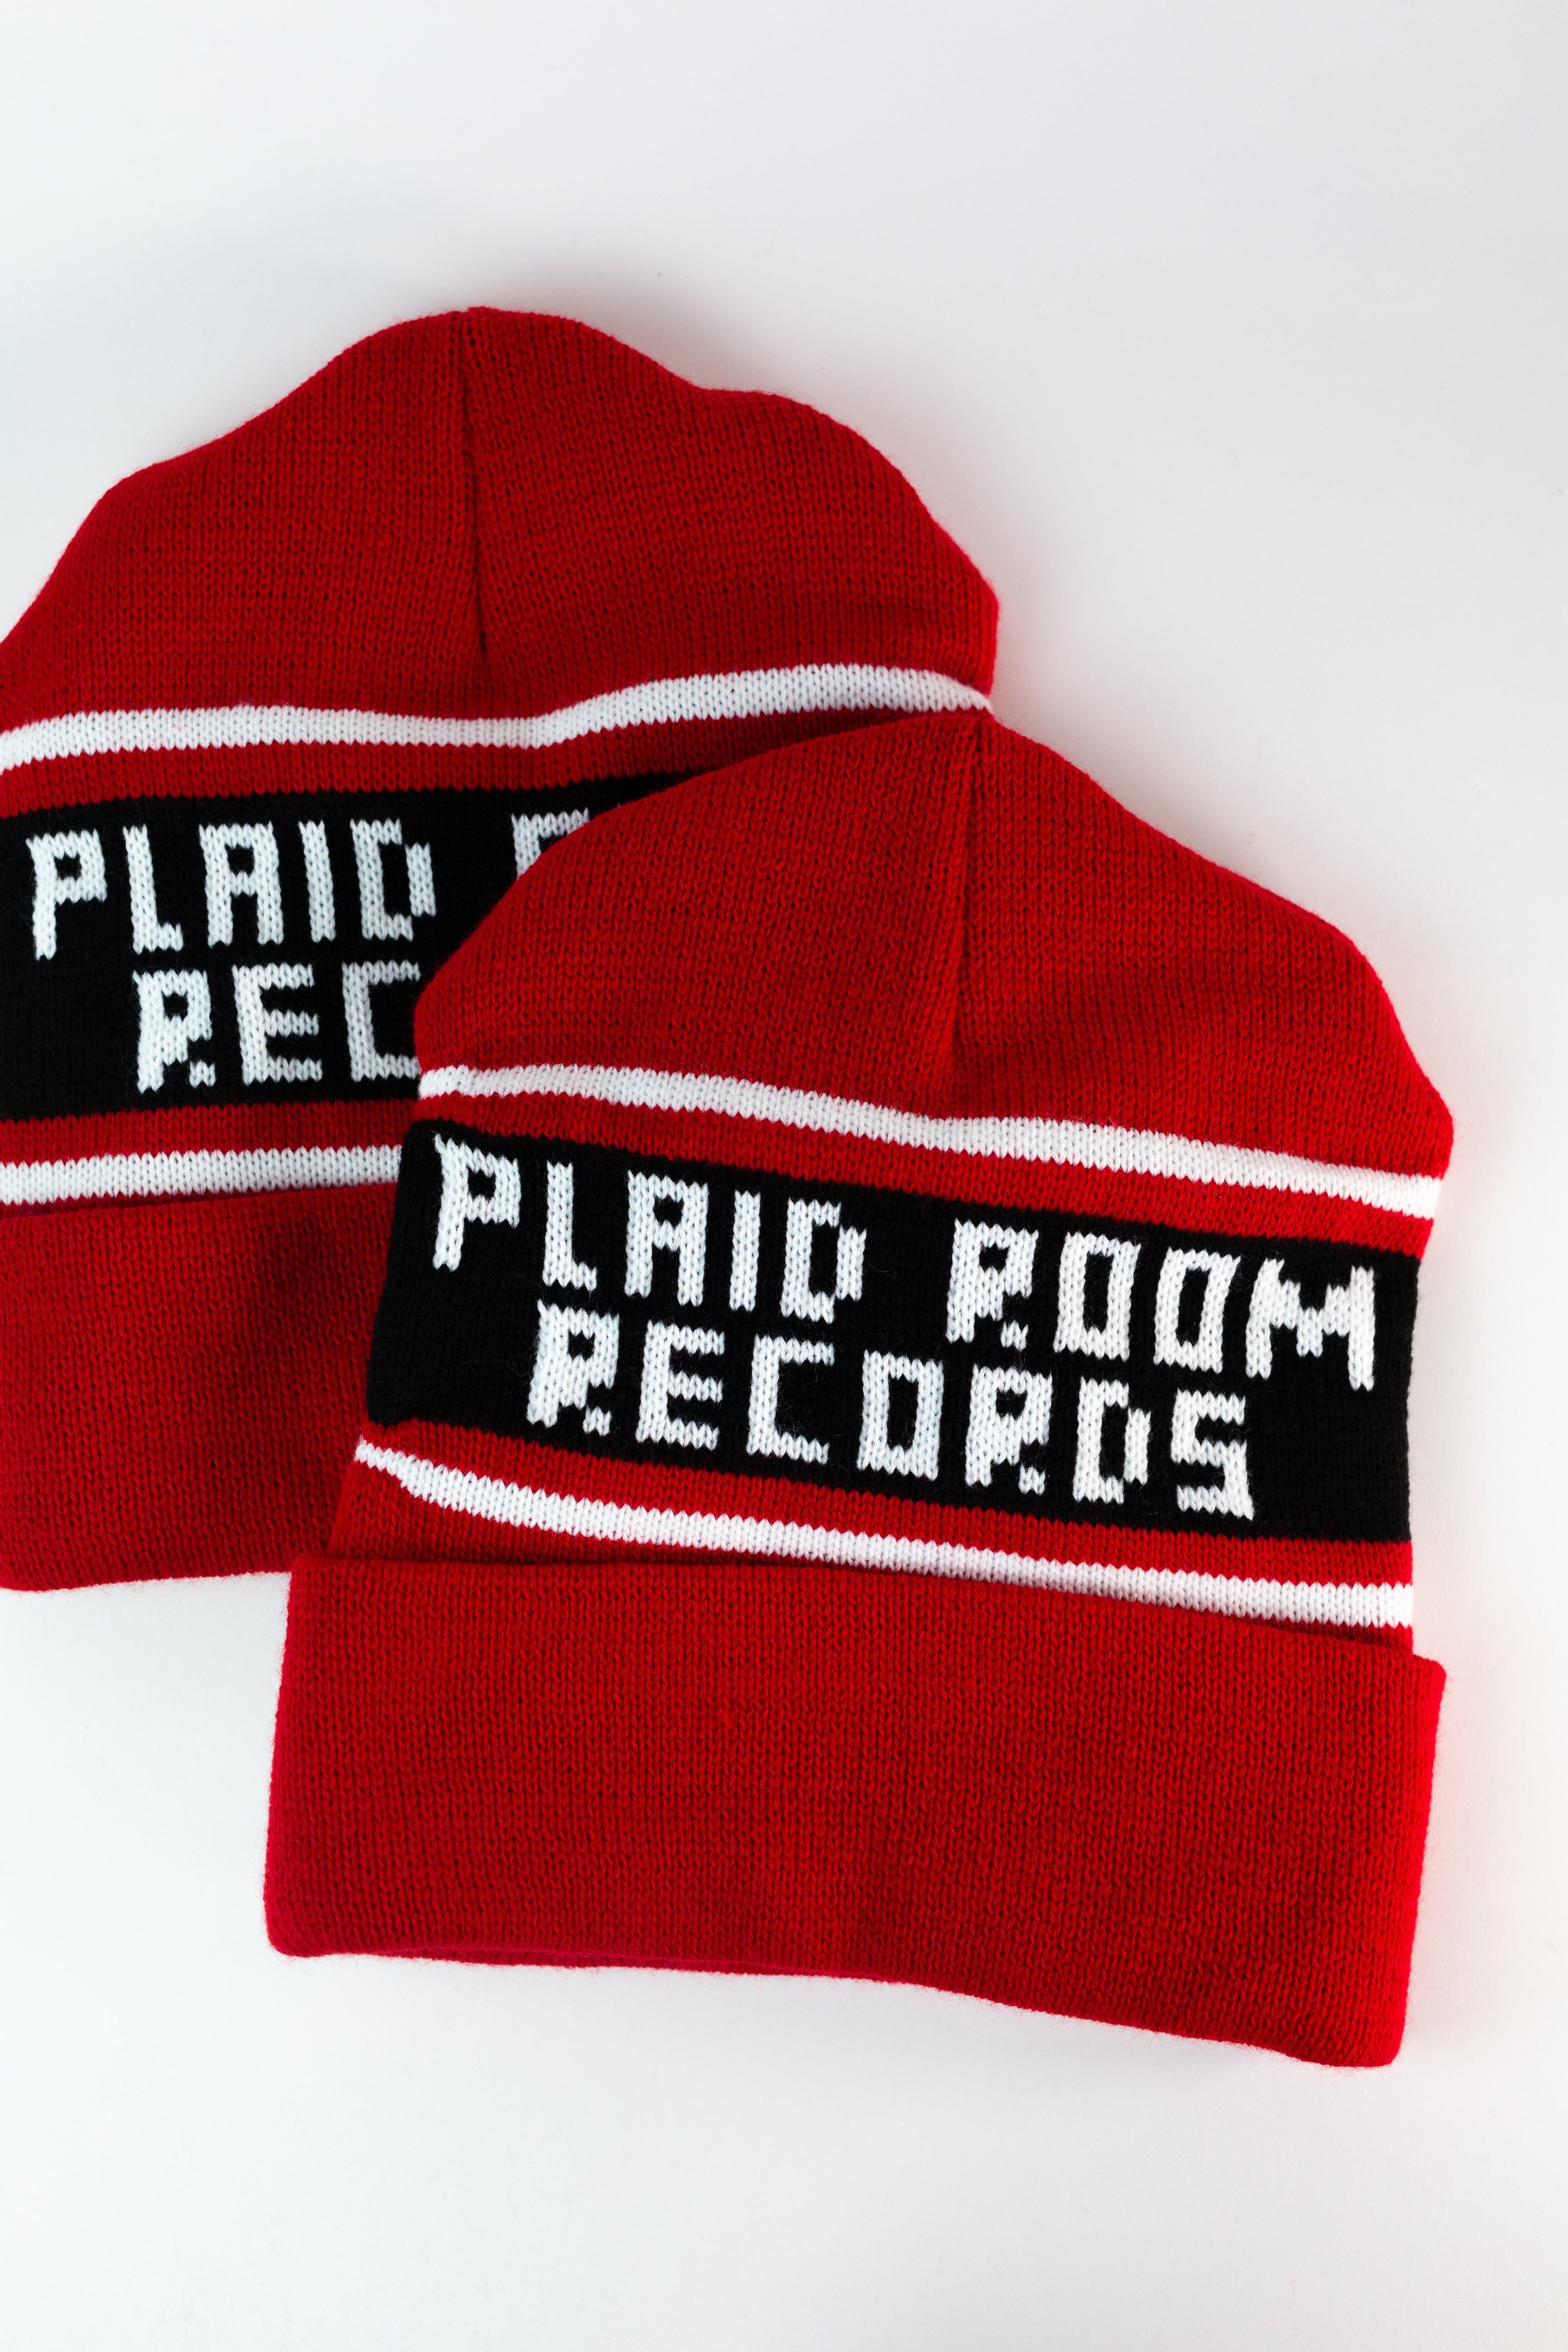 Plaid Room Winter Hat - Red / Black